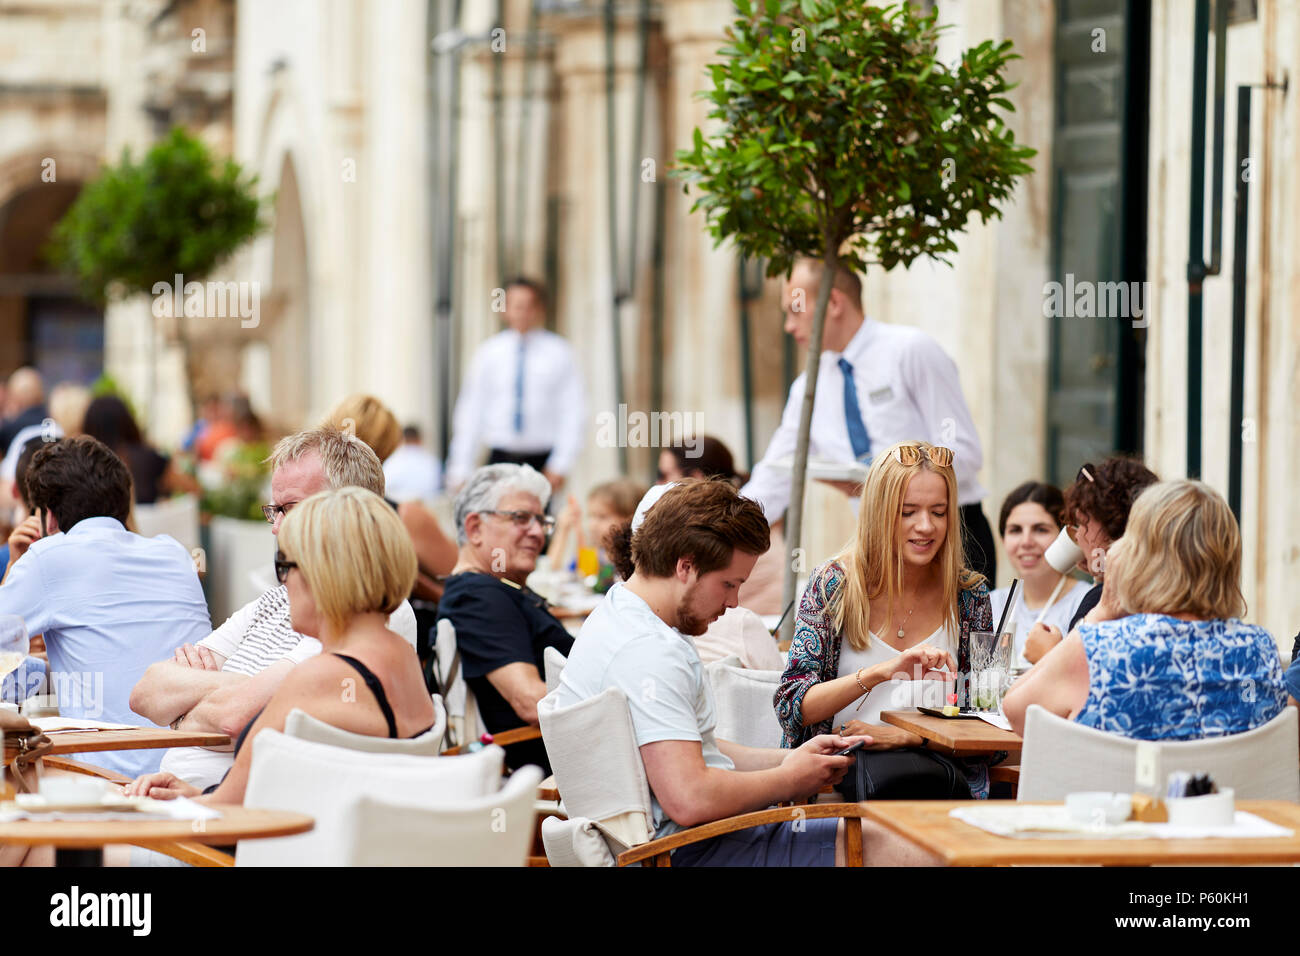 Cafe scene Dubrovnik Croatia Stock Photo